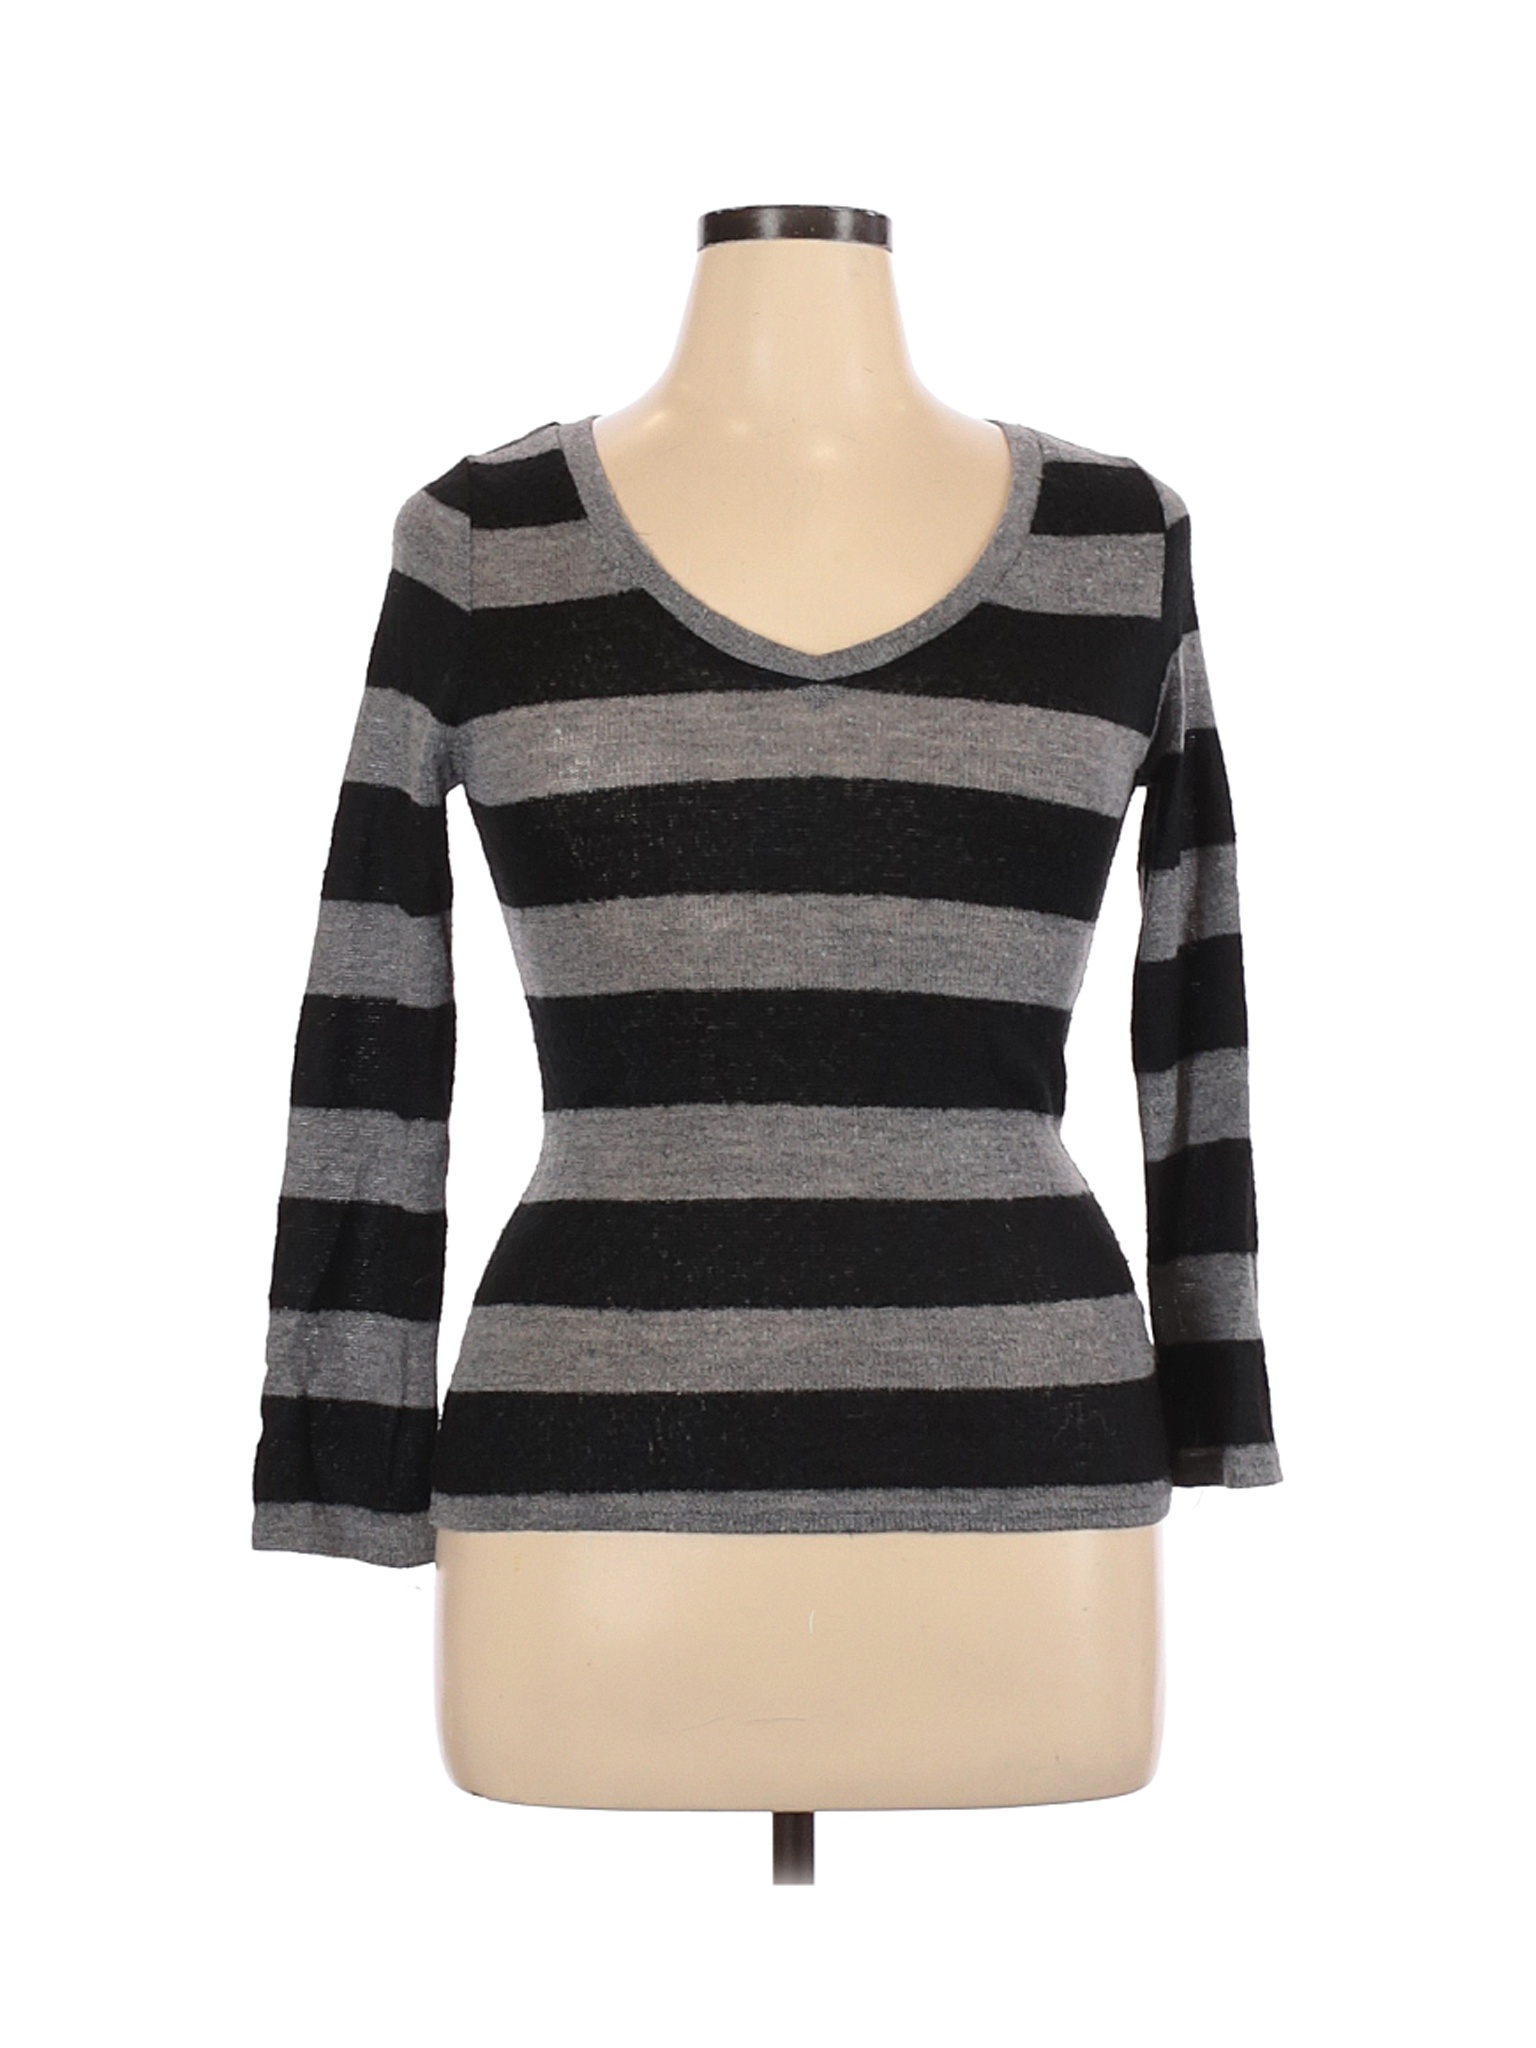 Zenana Outfitters Women Gray Pullover Sweater L | eBay